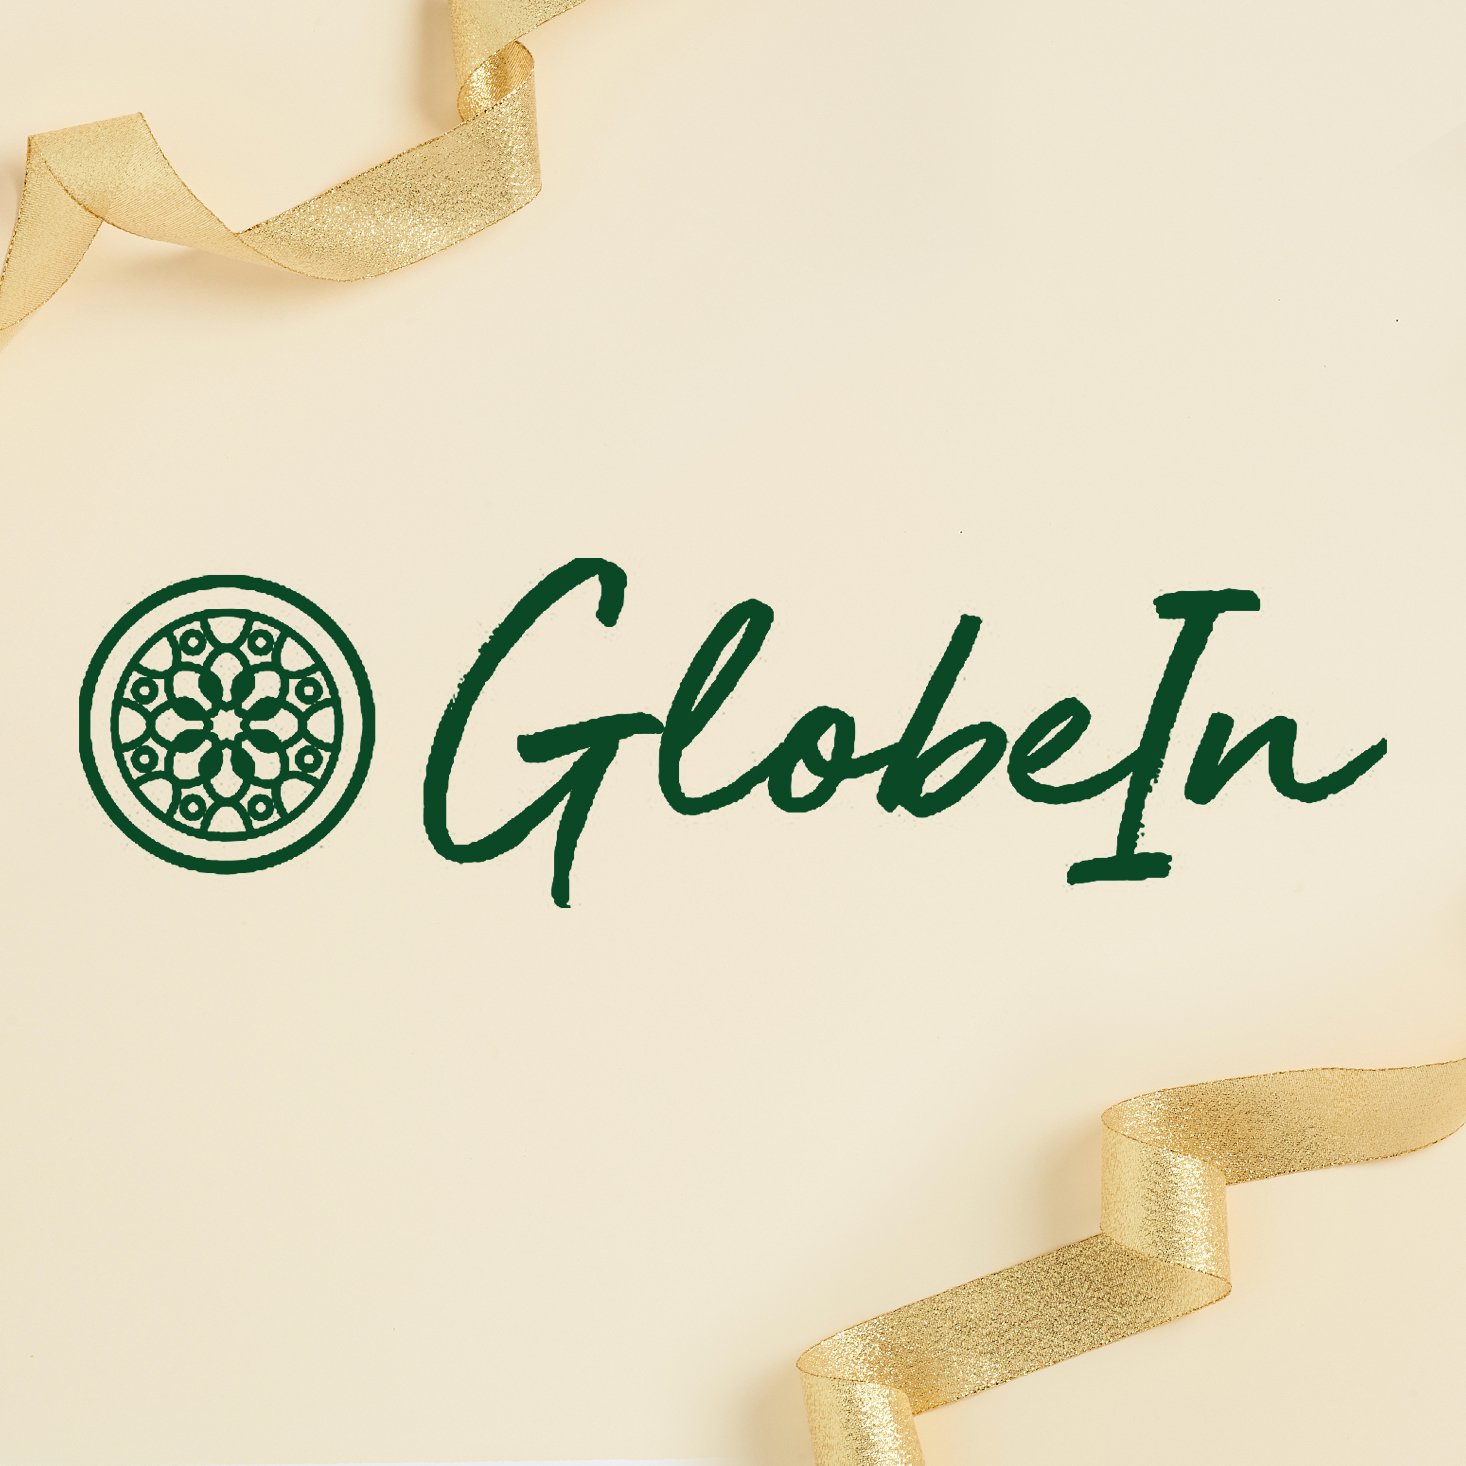 GlobeIn February 2021 Box FULL Spoilers + Coupon